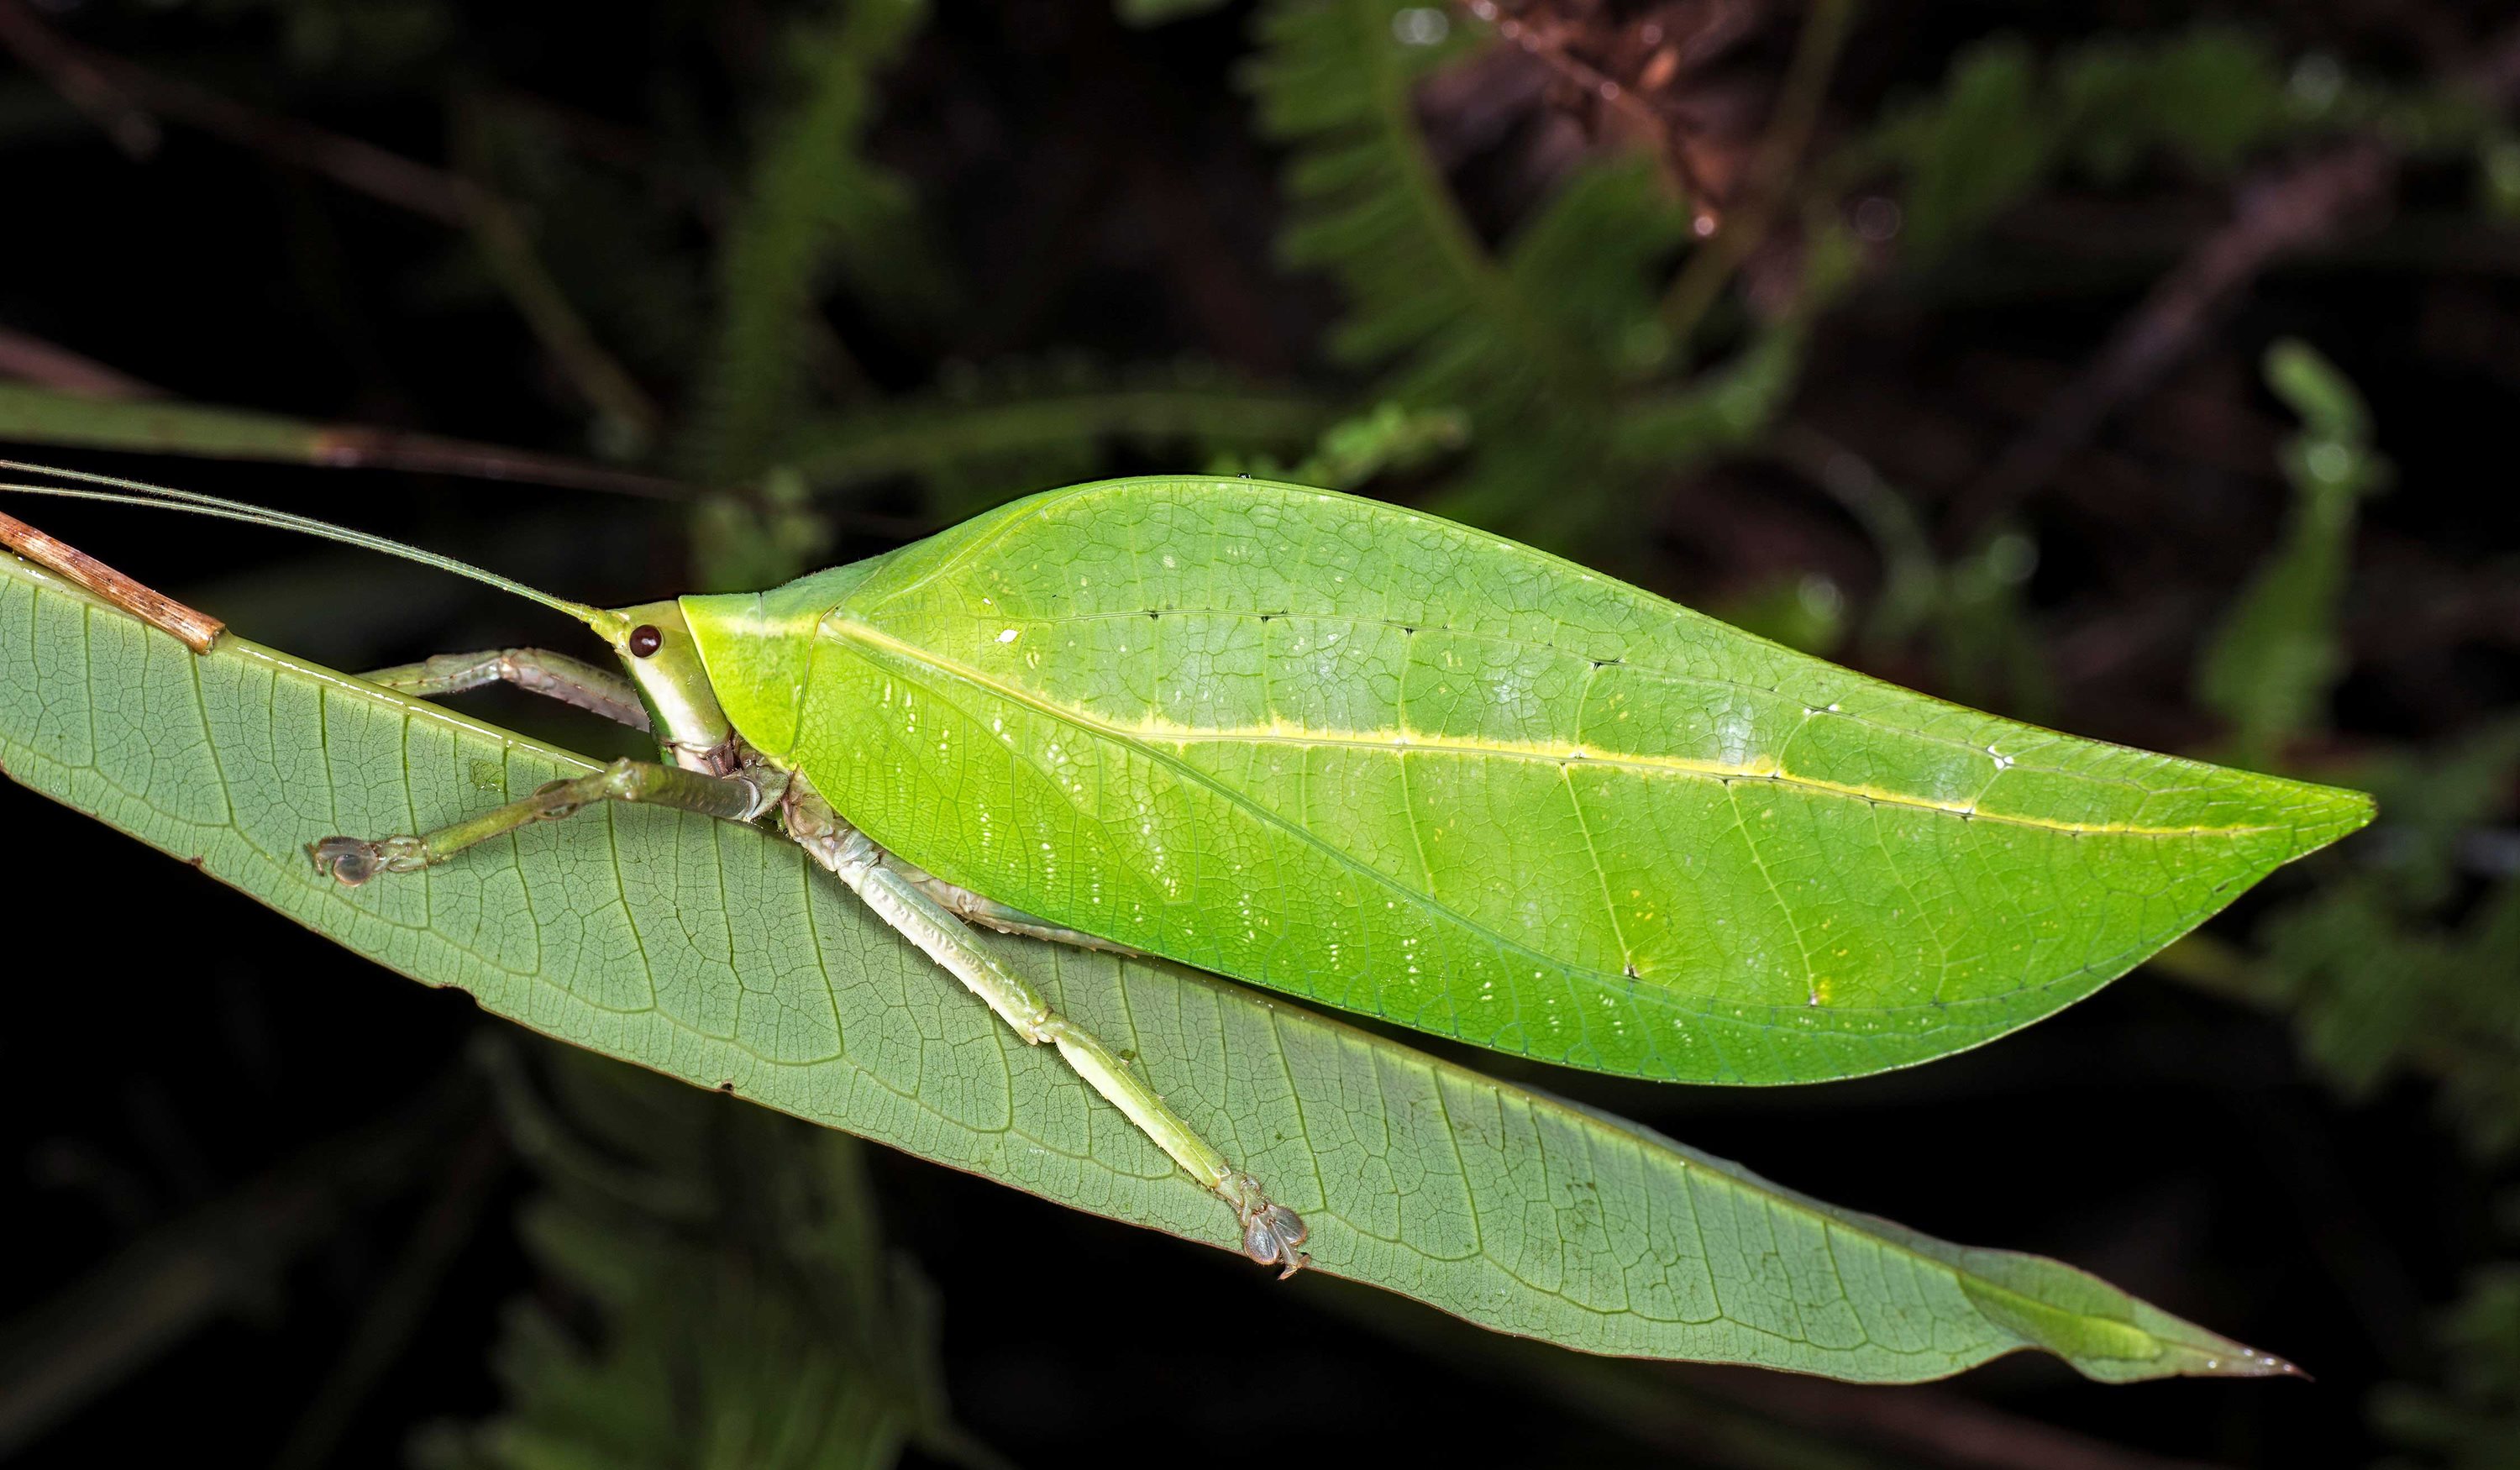 A katydid blending in with a leaf.